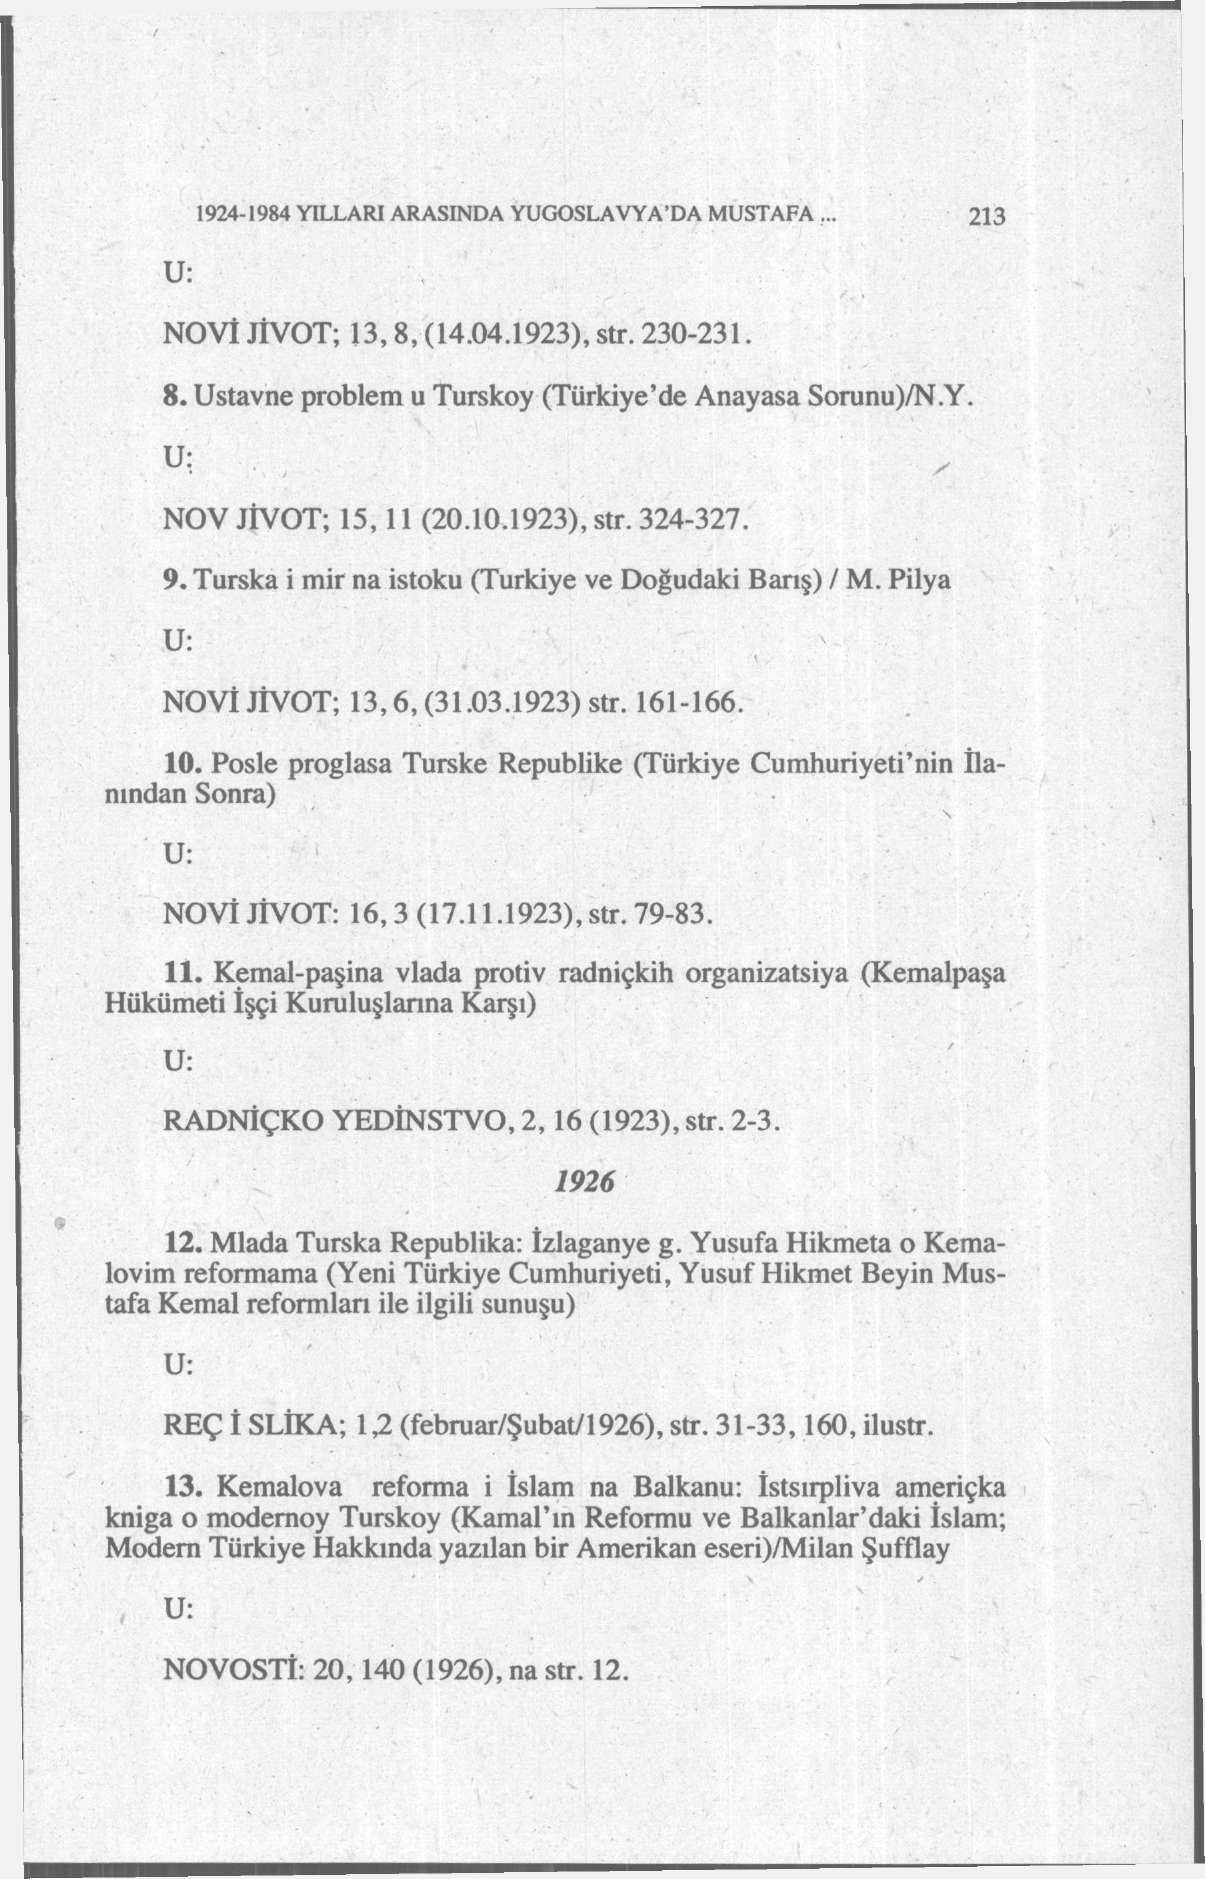 1924-1984 YILLARI ARASINDA YUGOSLAVYA'DA MUSTAFA... 213 NOVİJİVOT; 13,8, (14.04.1923), str. 230-231. 8. Ustavne problem u Turskoy (Türkiye'de Anayasa Sorunu)/N.Y. u; NOV JİVOT; 15,11 (20.10.